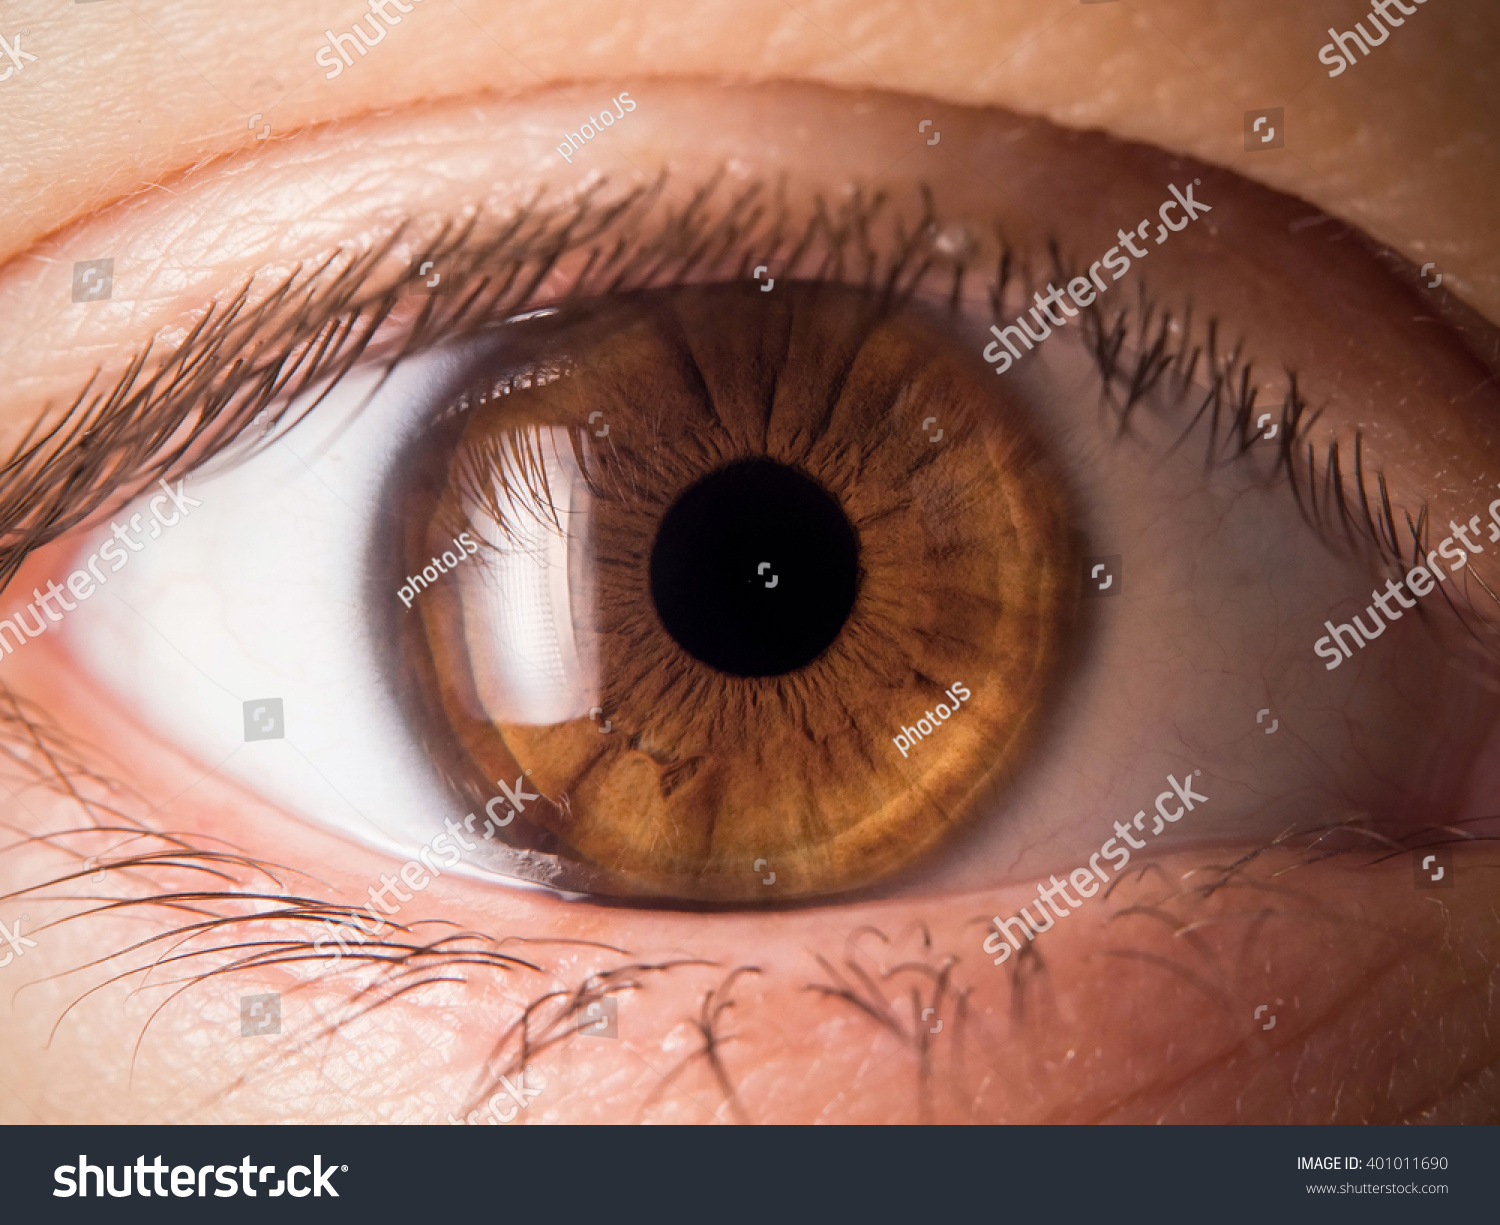 Human Eye Detail Stock Photo 401011690 : Shutterstock